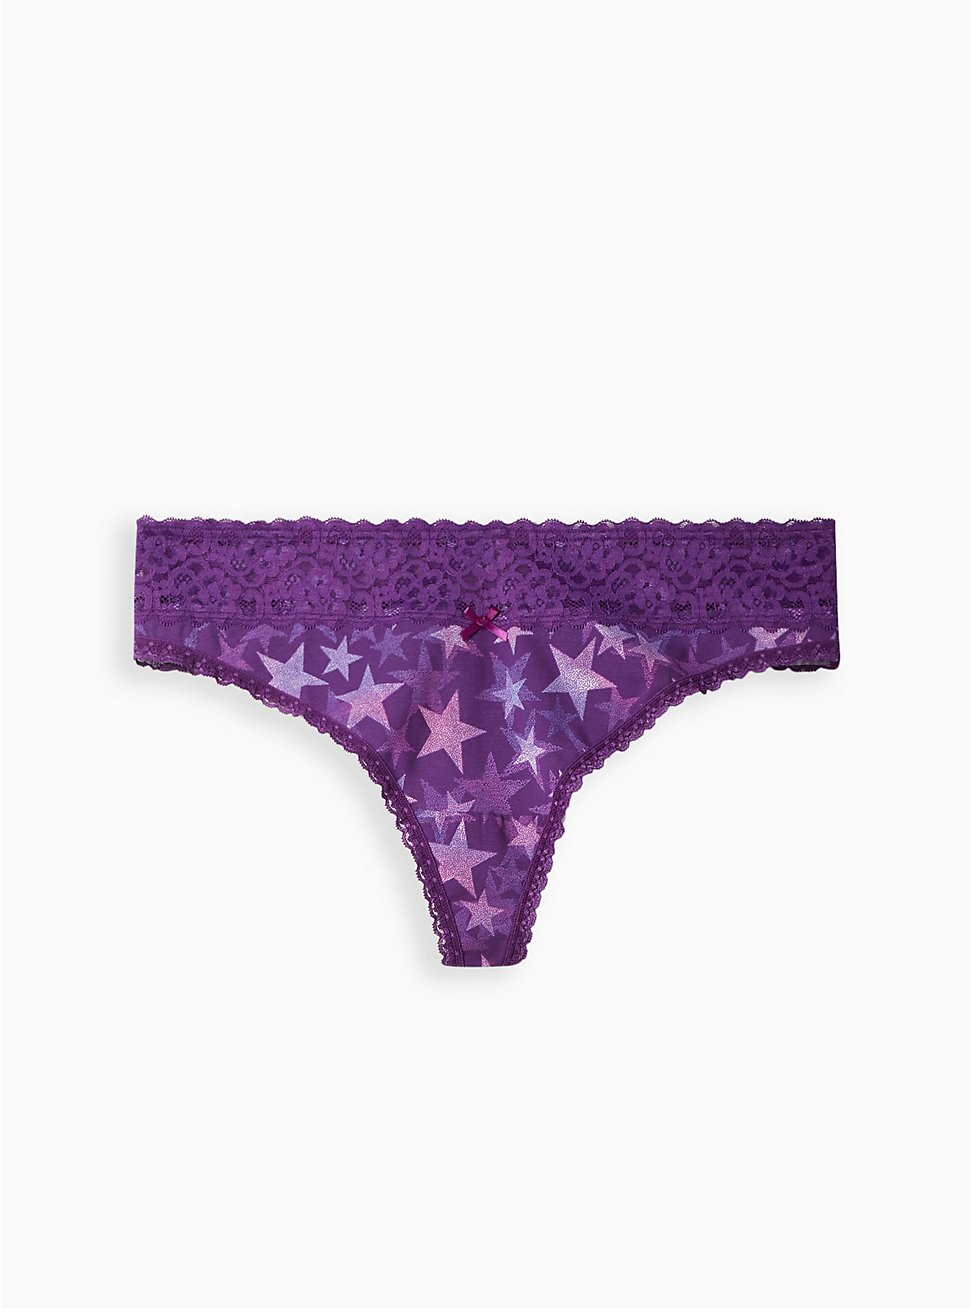 Plus Size Wide Lace Trim Thong Panty - Cotton Stars Purple, DOTTED STARS PURPLE, hi-res